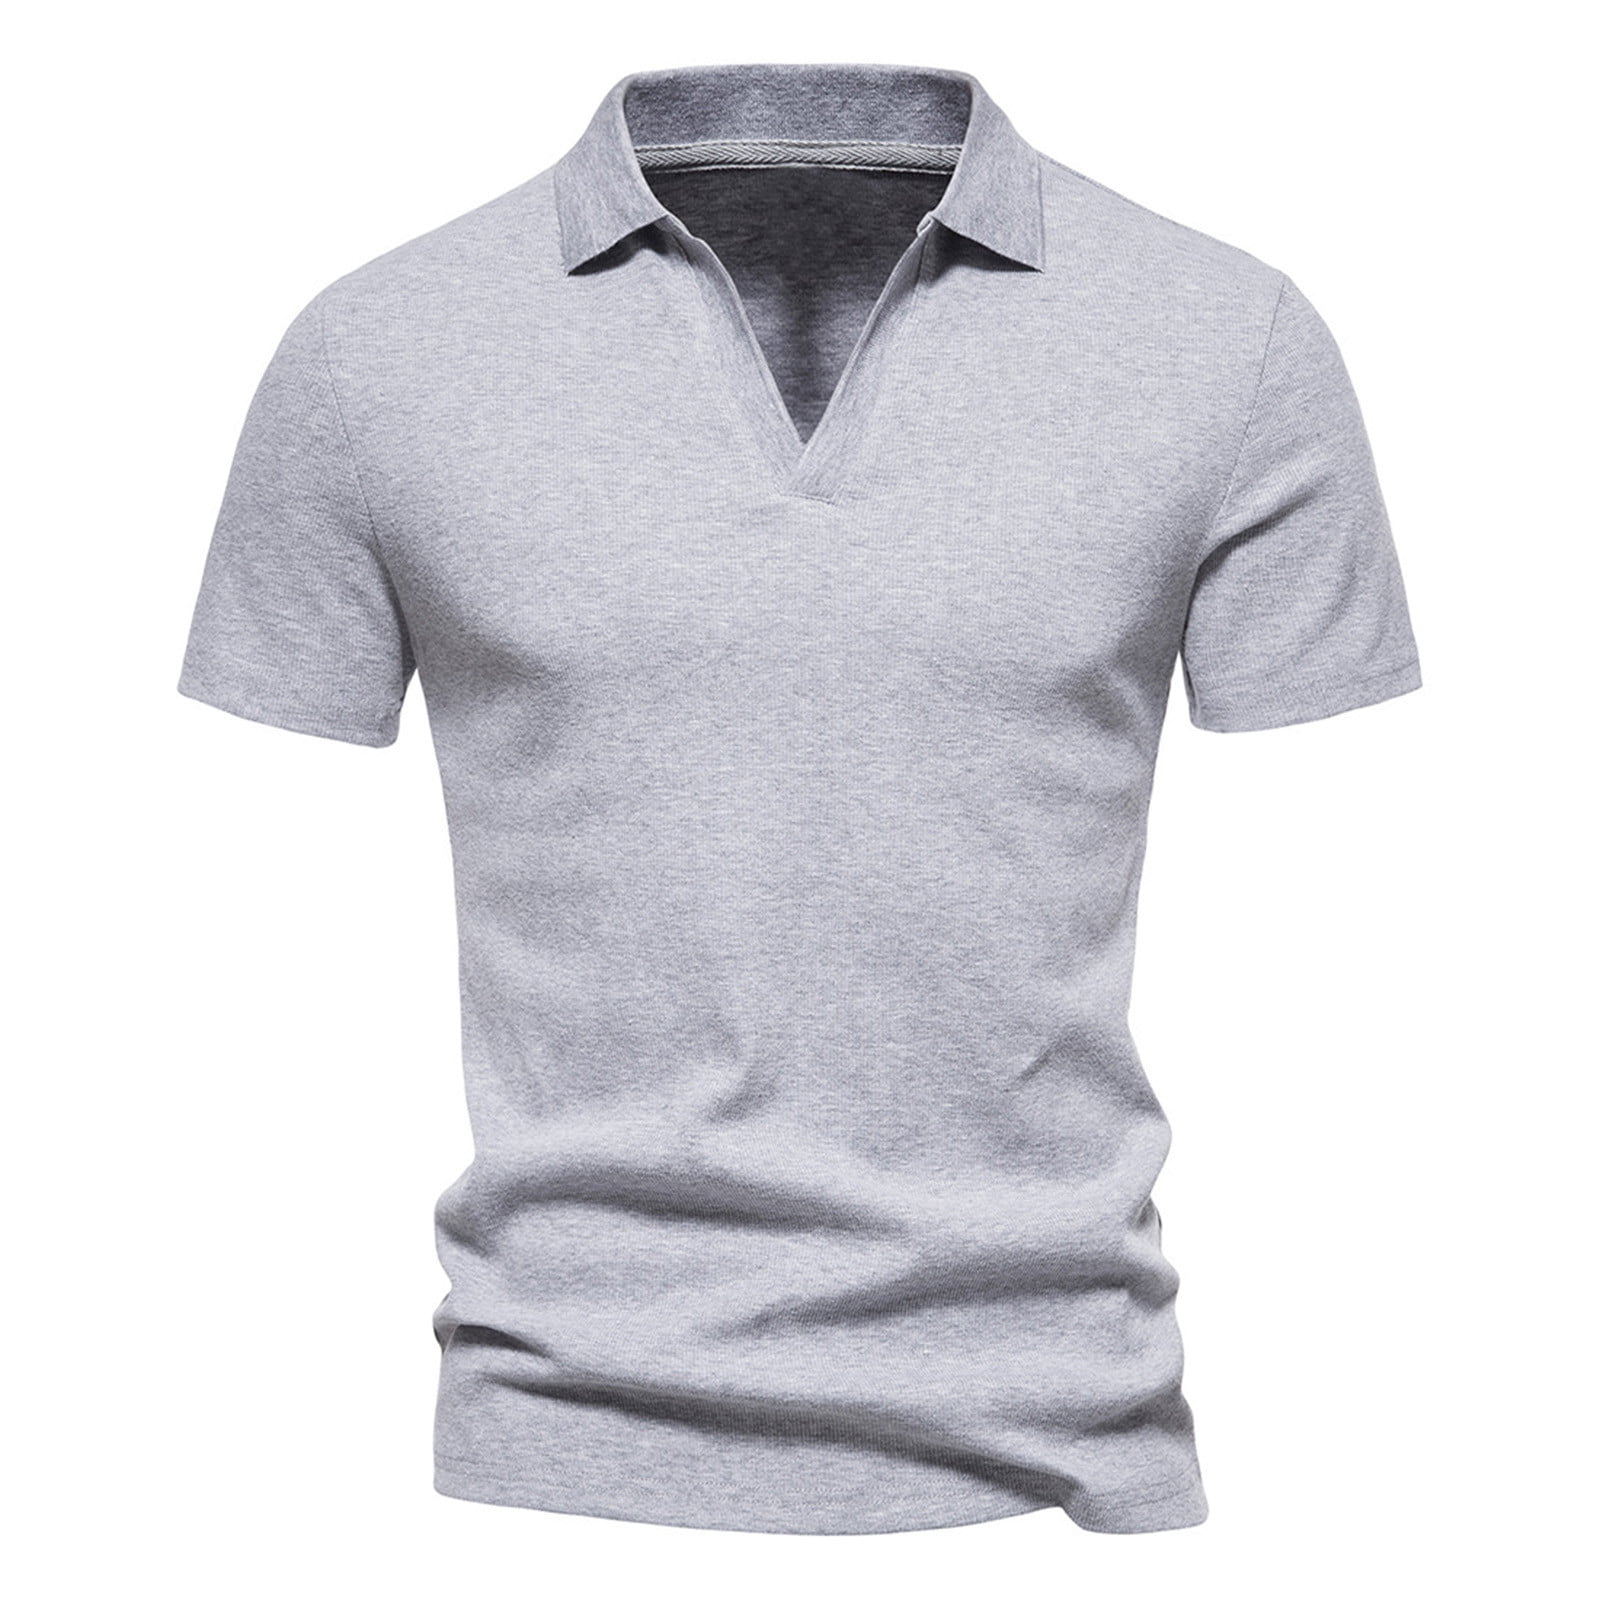 APEXFWDT Men's Polo Shirt Casual Short Sleeve V Neck Slim Fit Golf